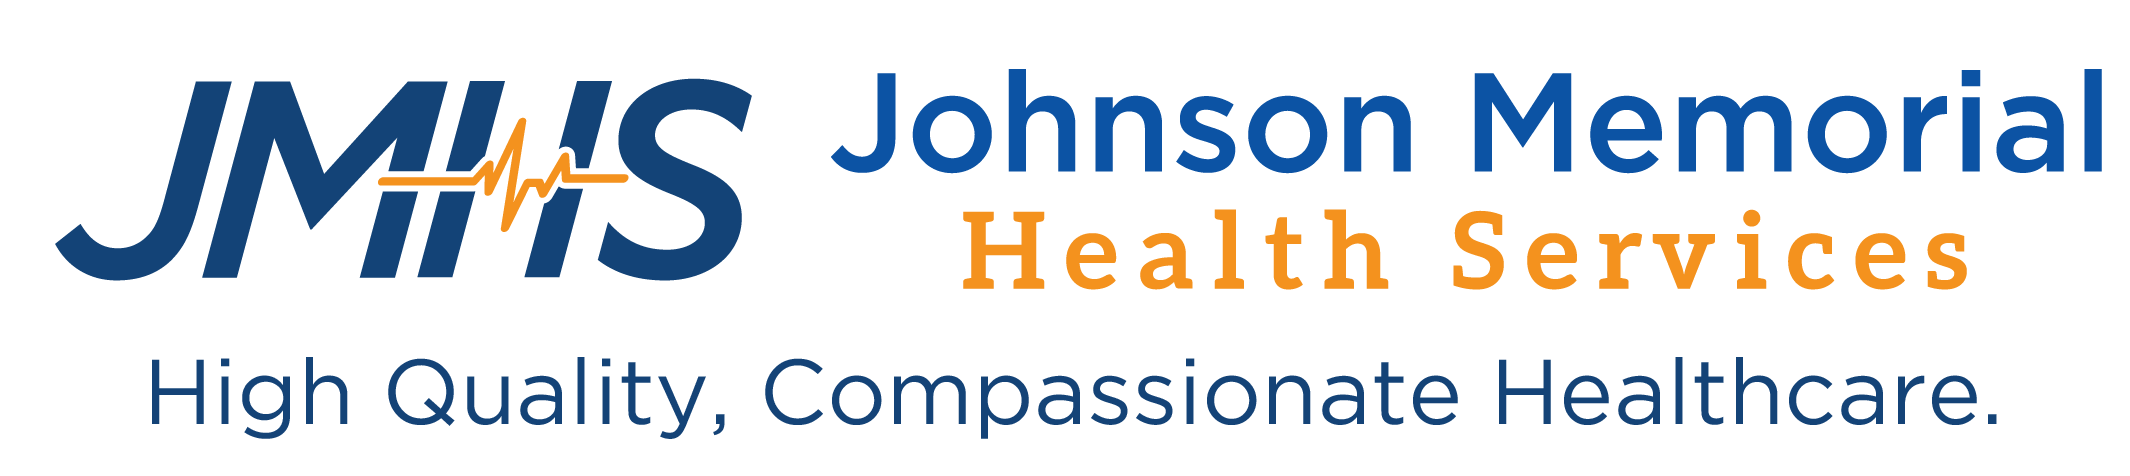 Johnson Memorial Health Services